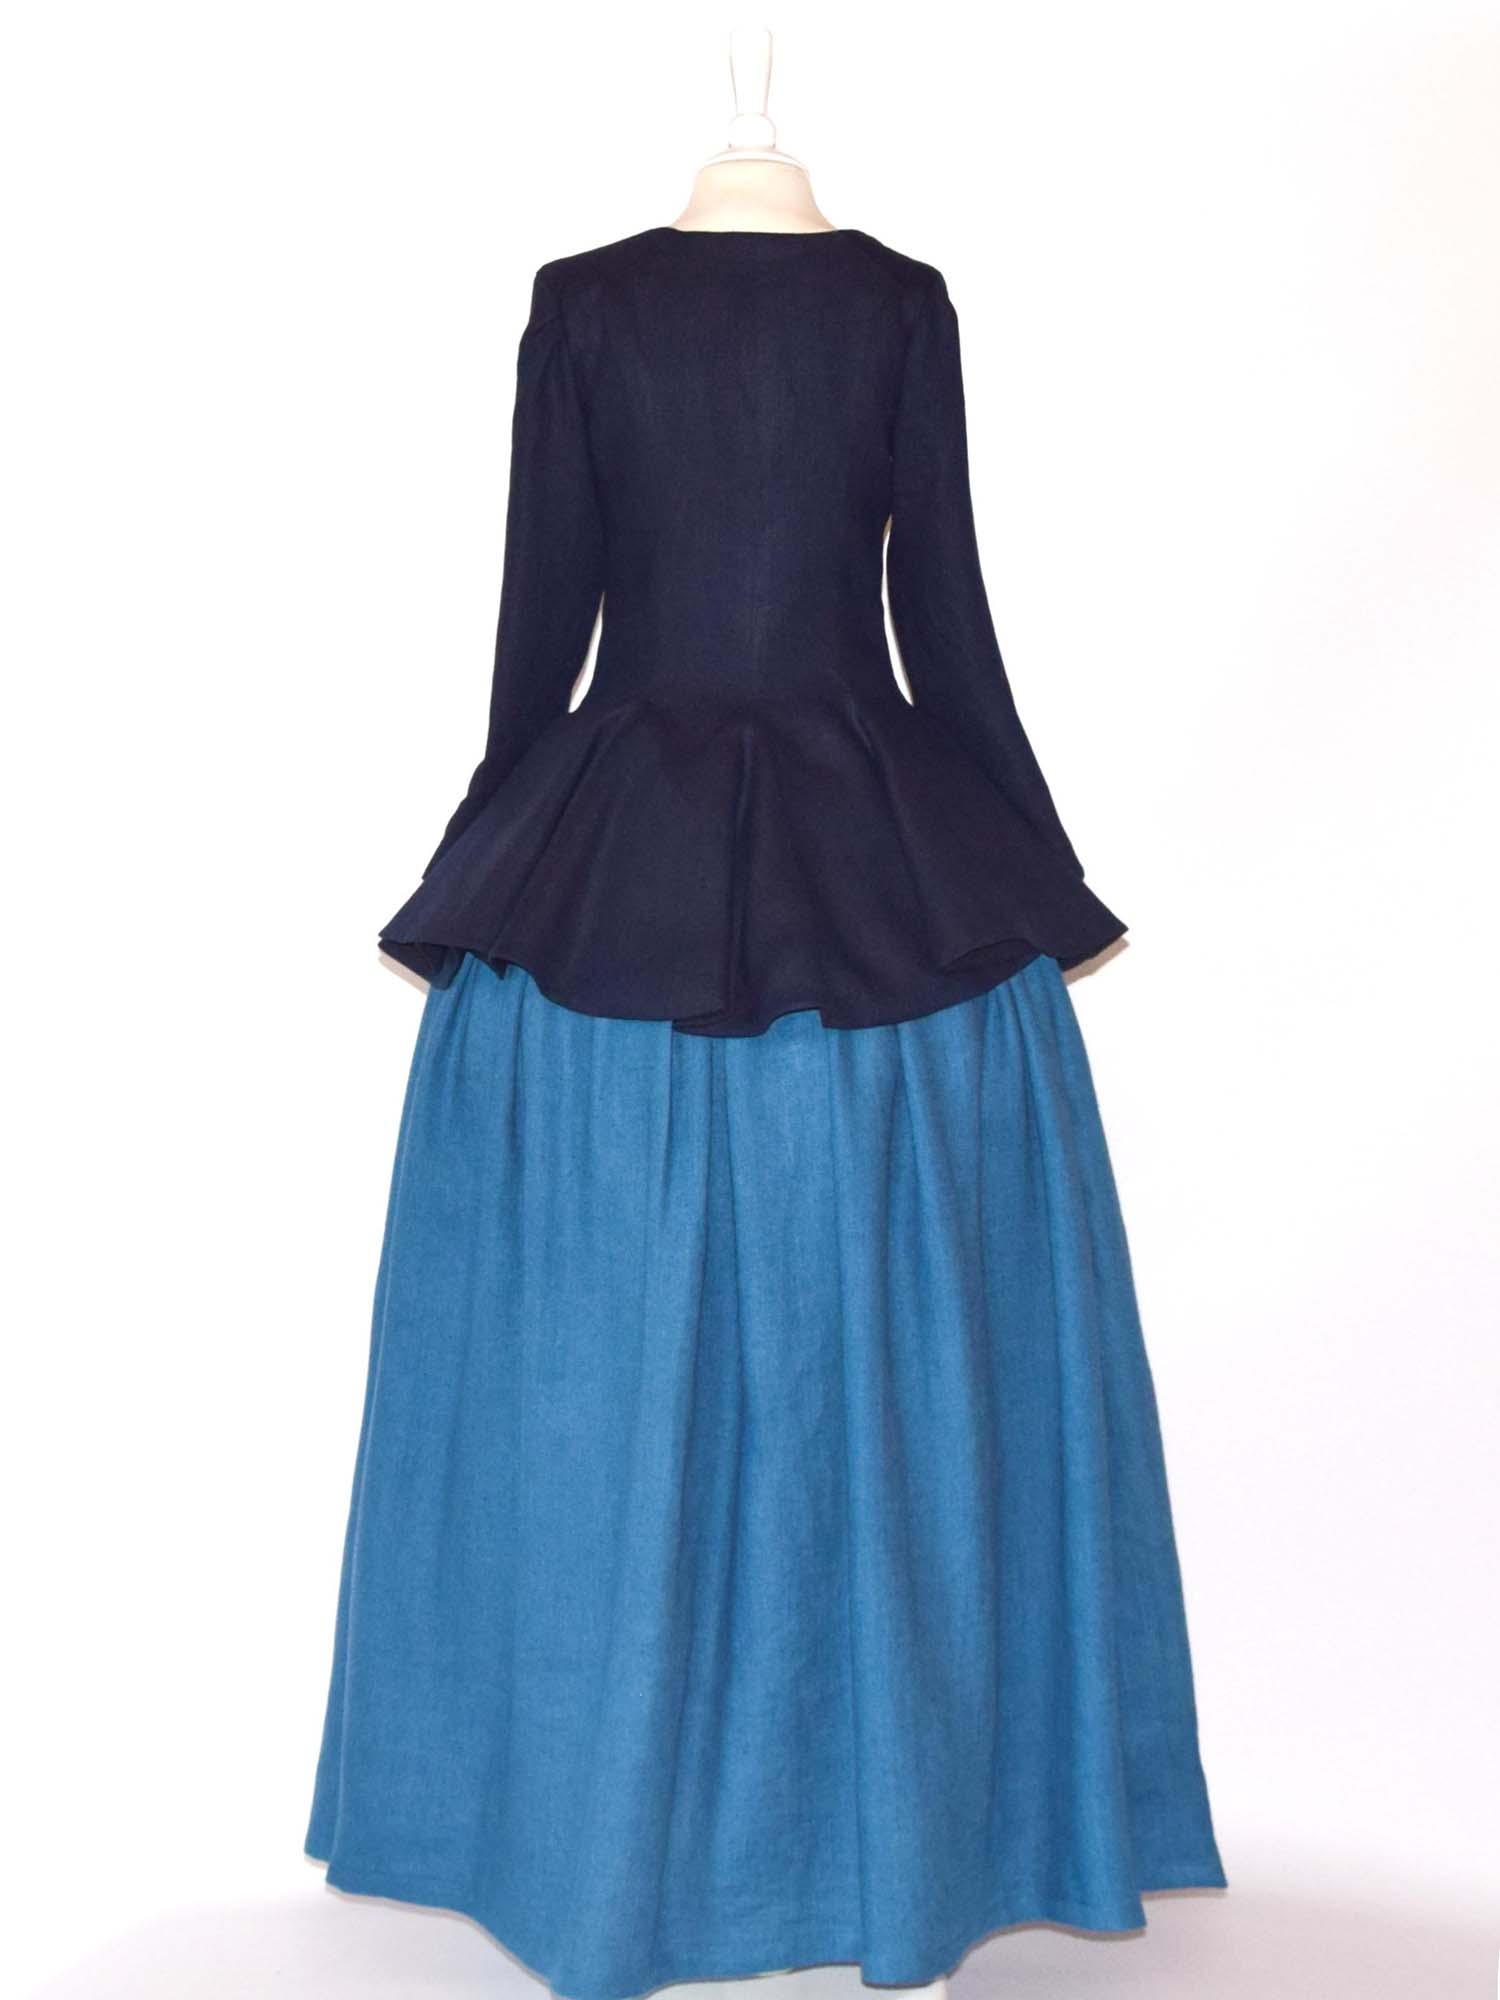 JANET, Colonial Costume in Night &amp; Steel Blue Linen - Atelier Serraspina